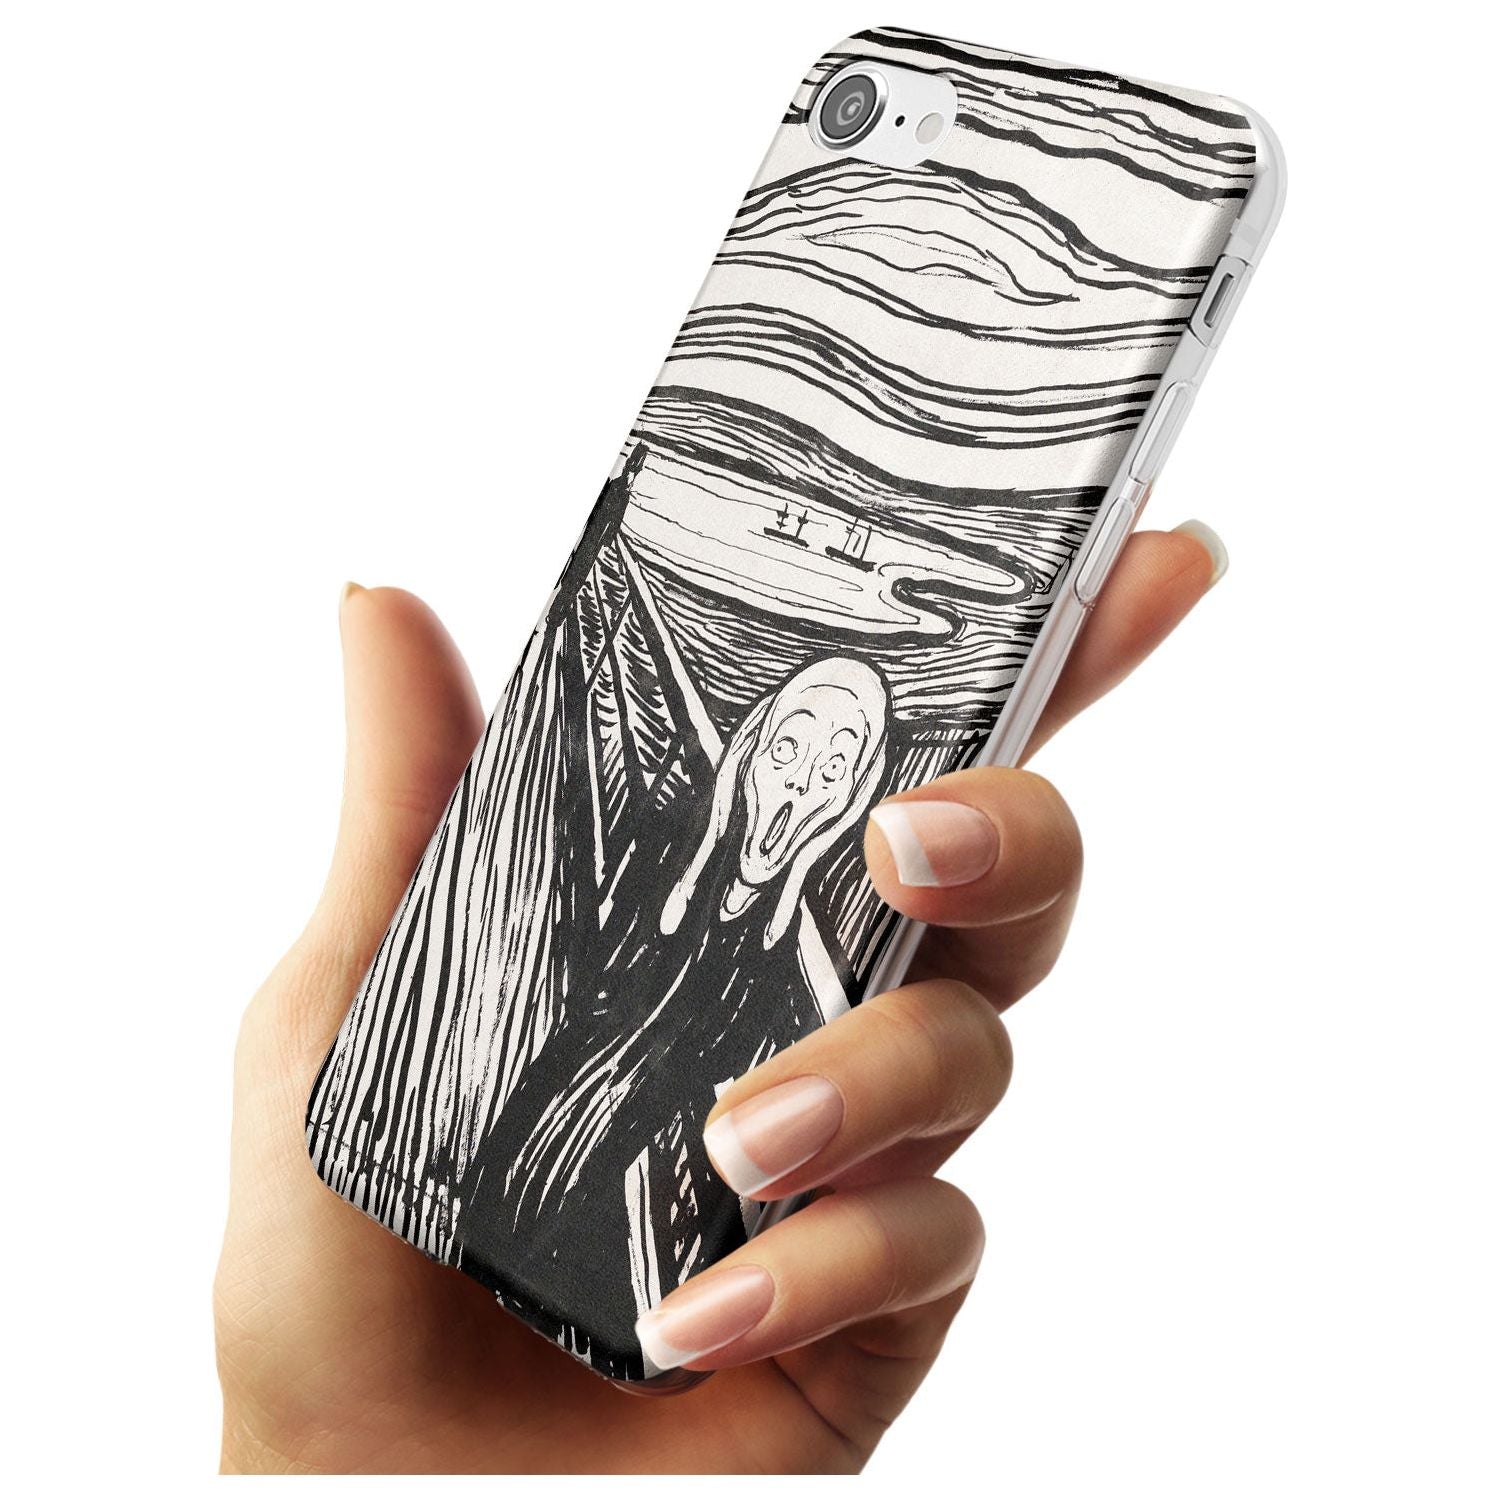 The Scream Slim TPU Phone Case for iPhone SE 8 7 Plus